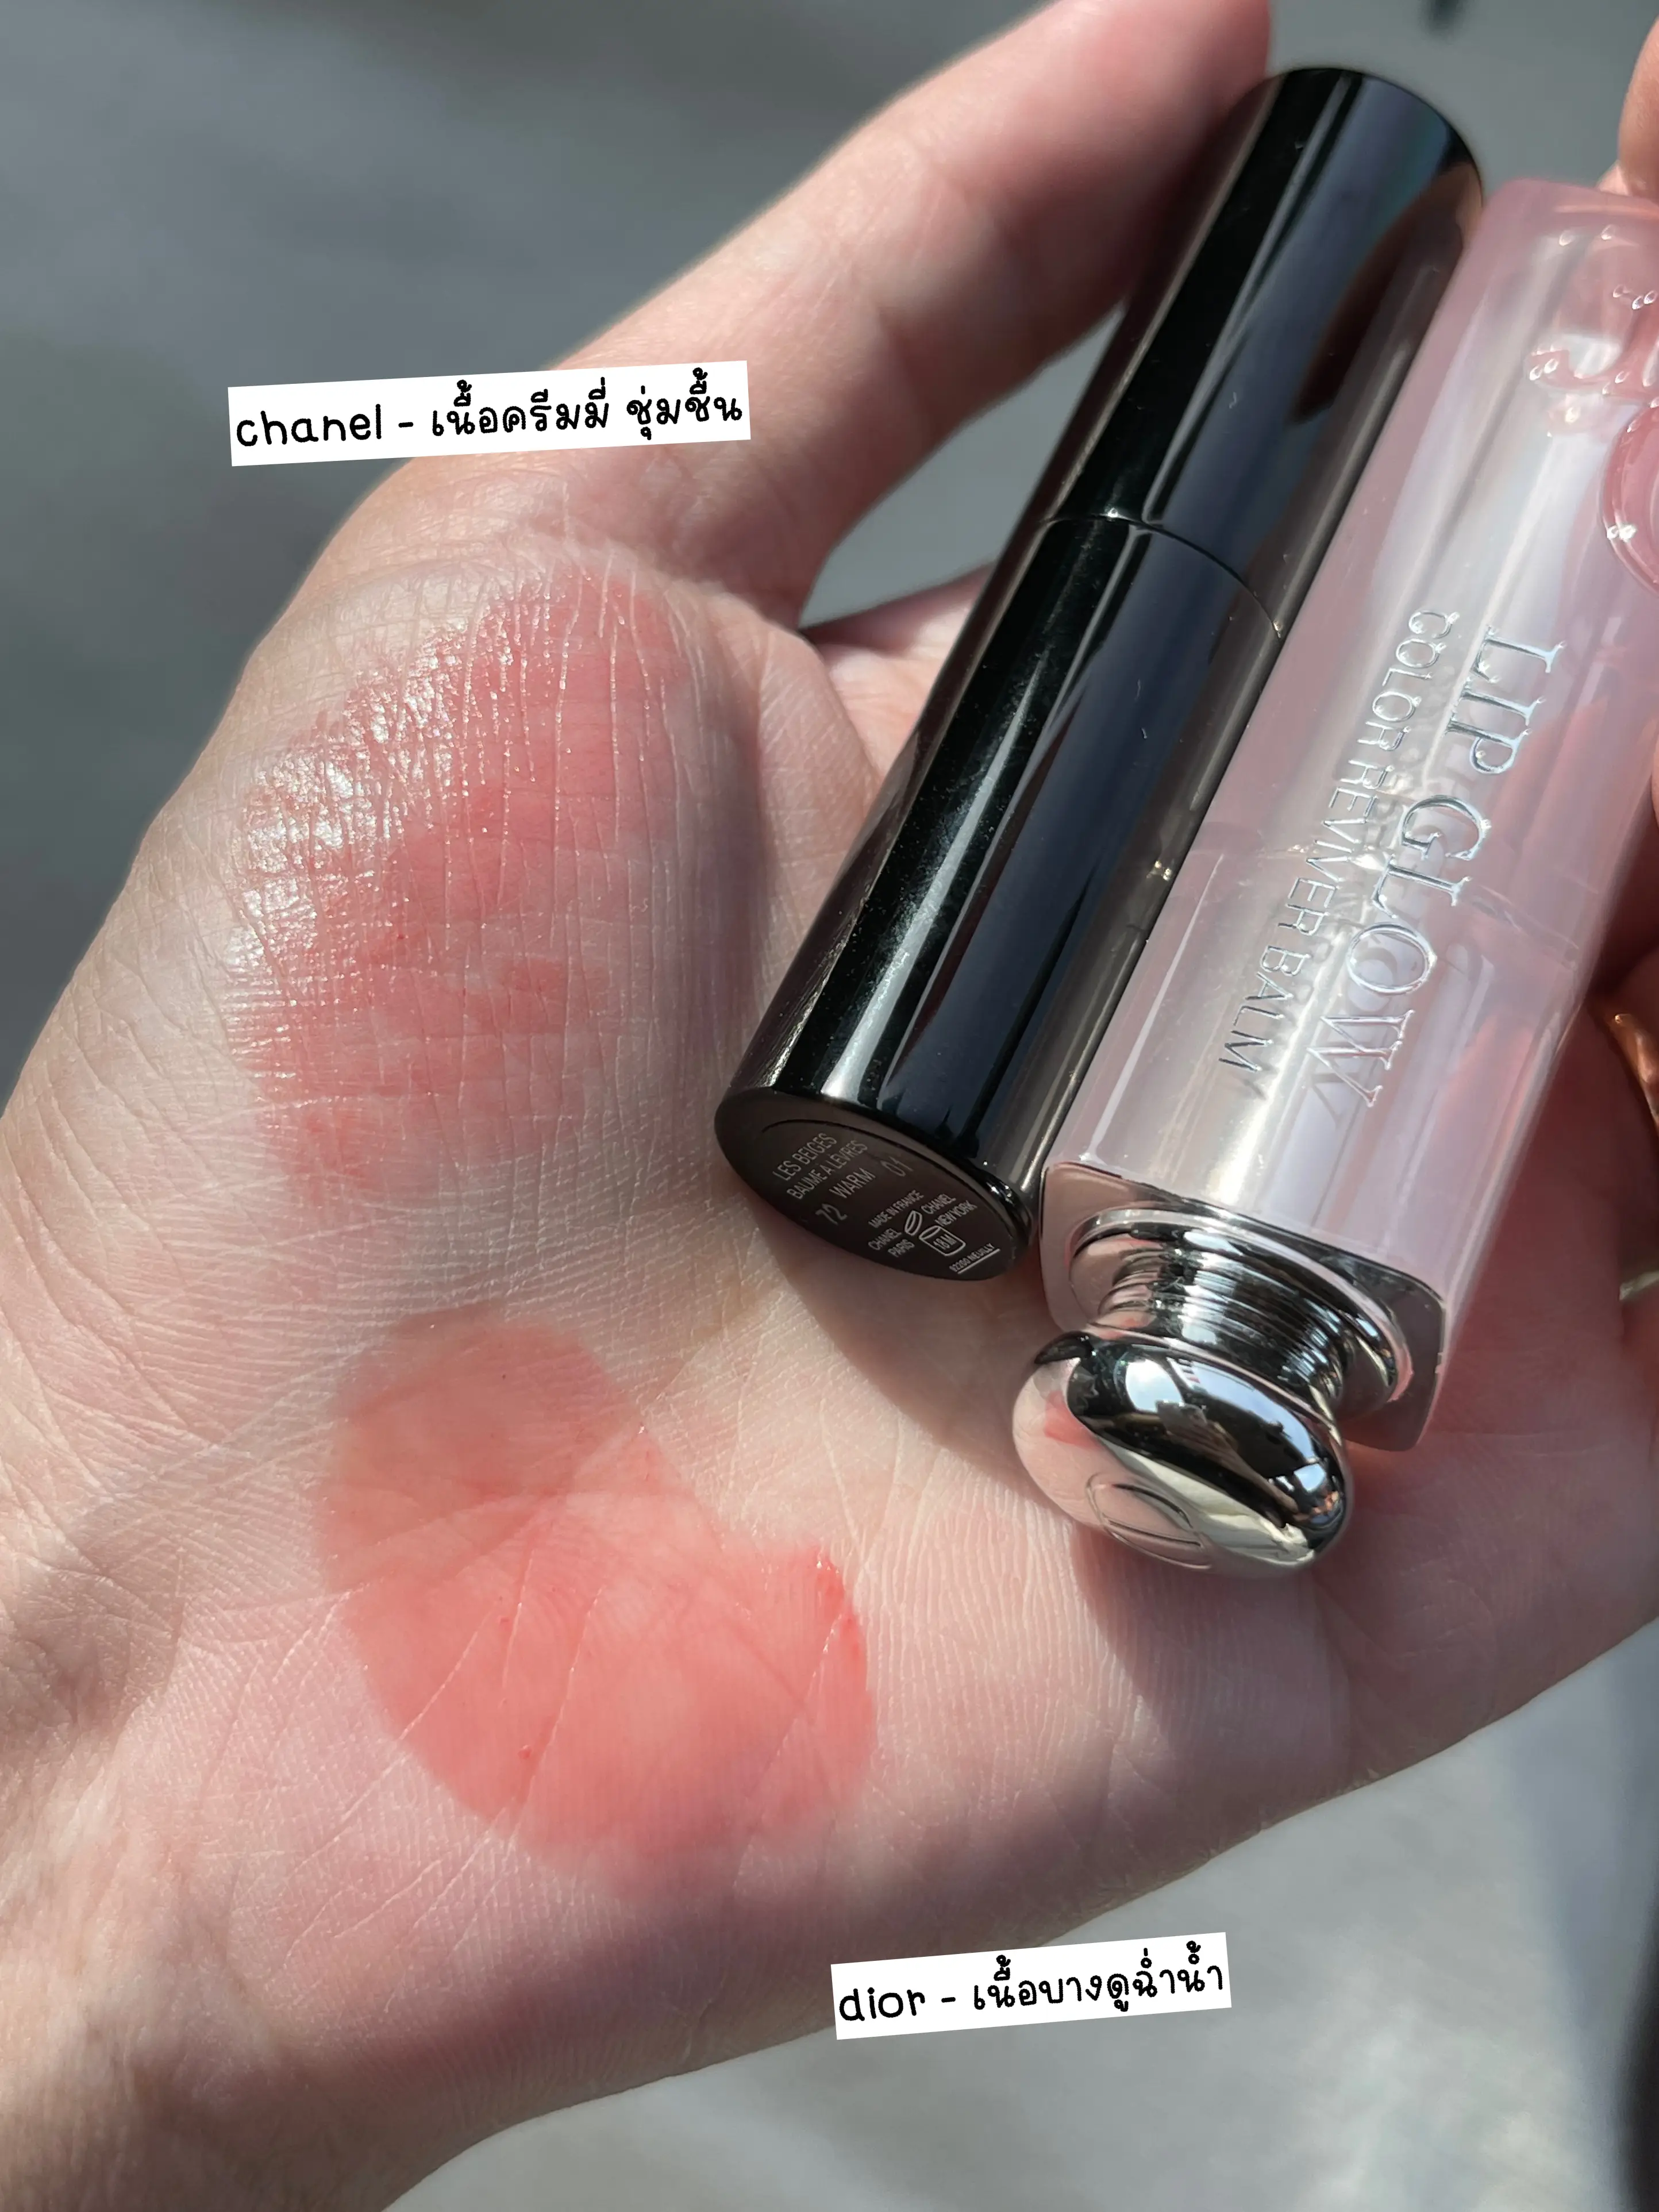 Dior Addict lipstick sampler palette swatches, review, photos